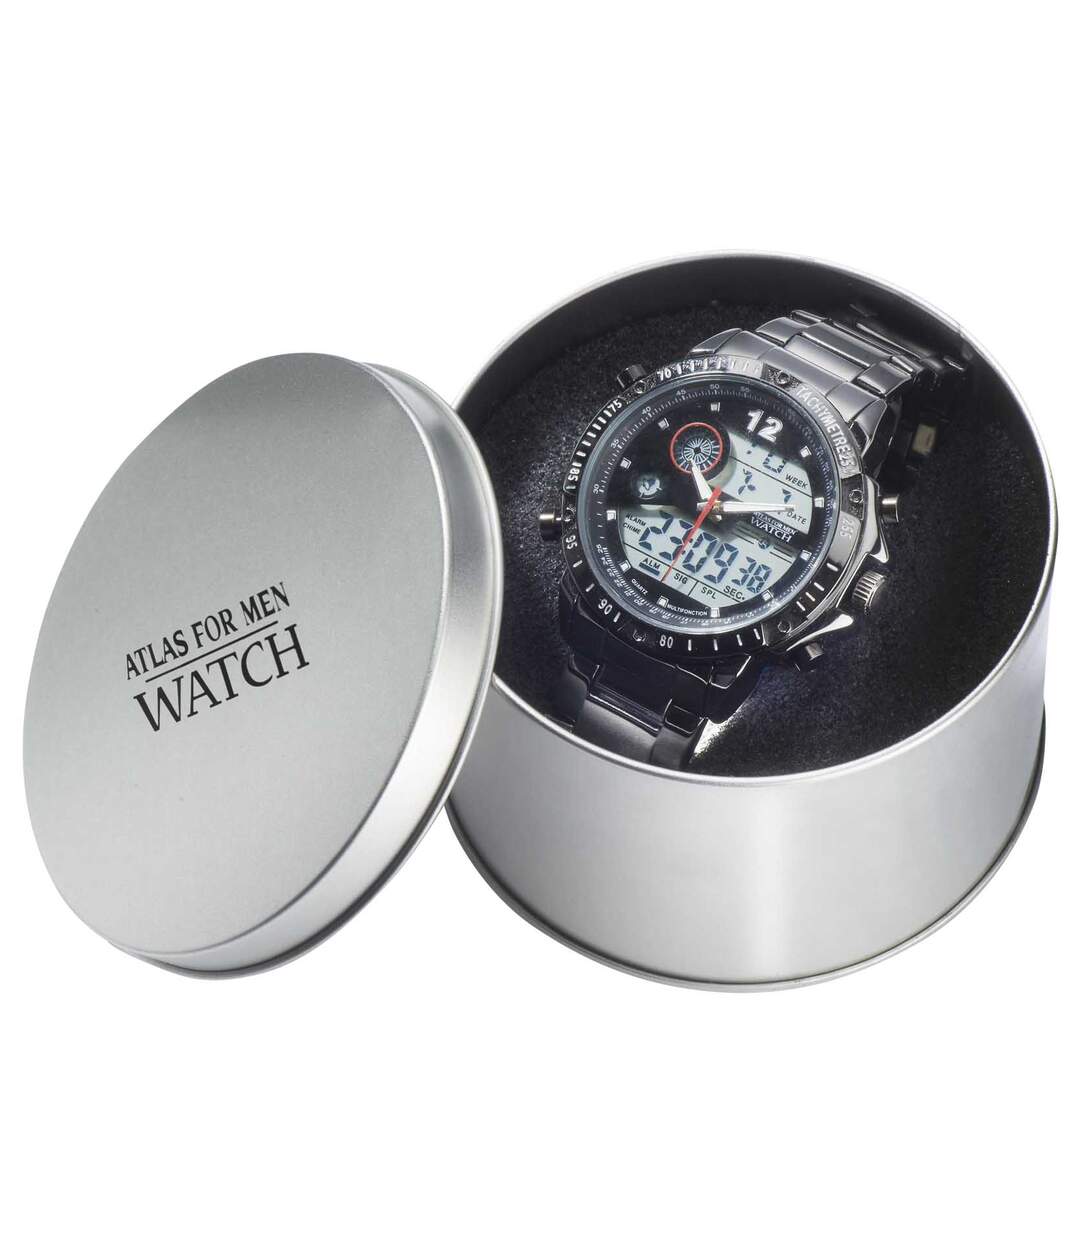 Die Armbanduhr Chronometer mit Doppel-Anzeige Atlas For Men